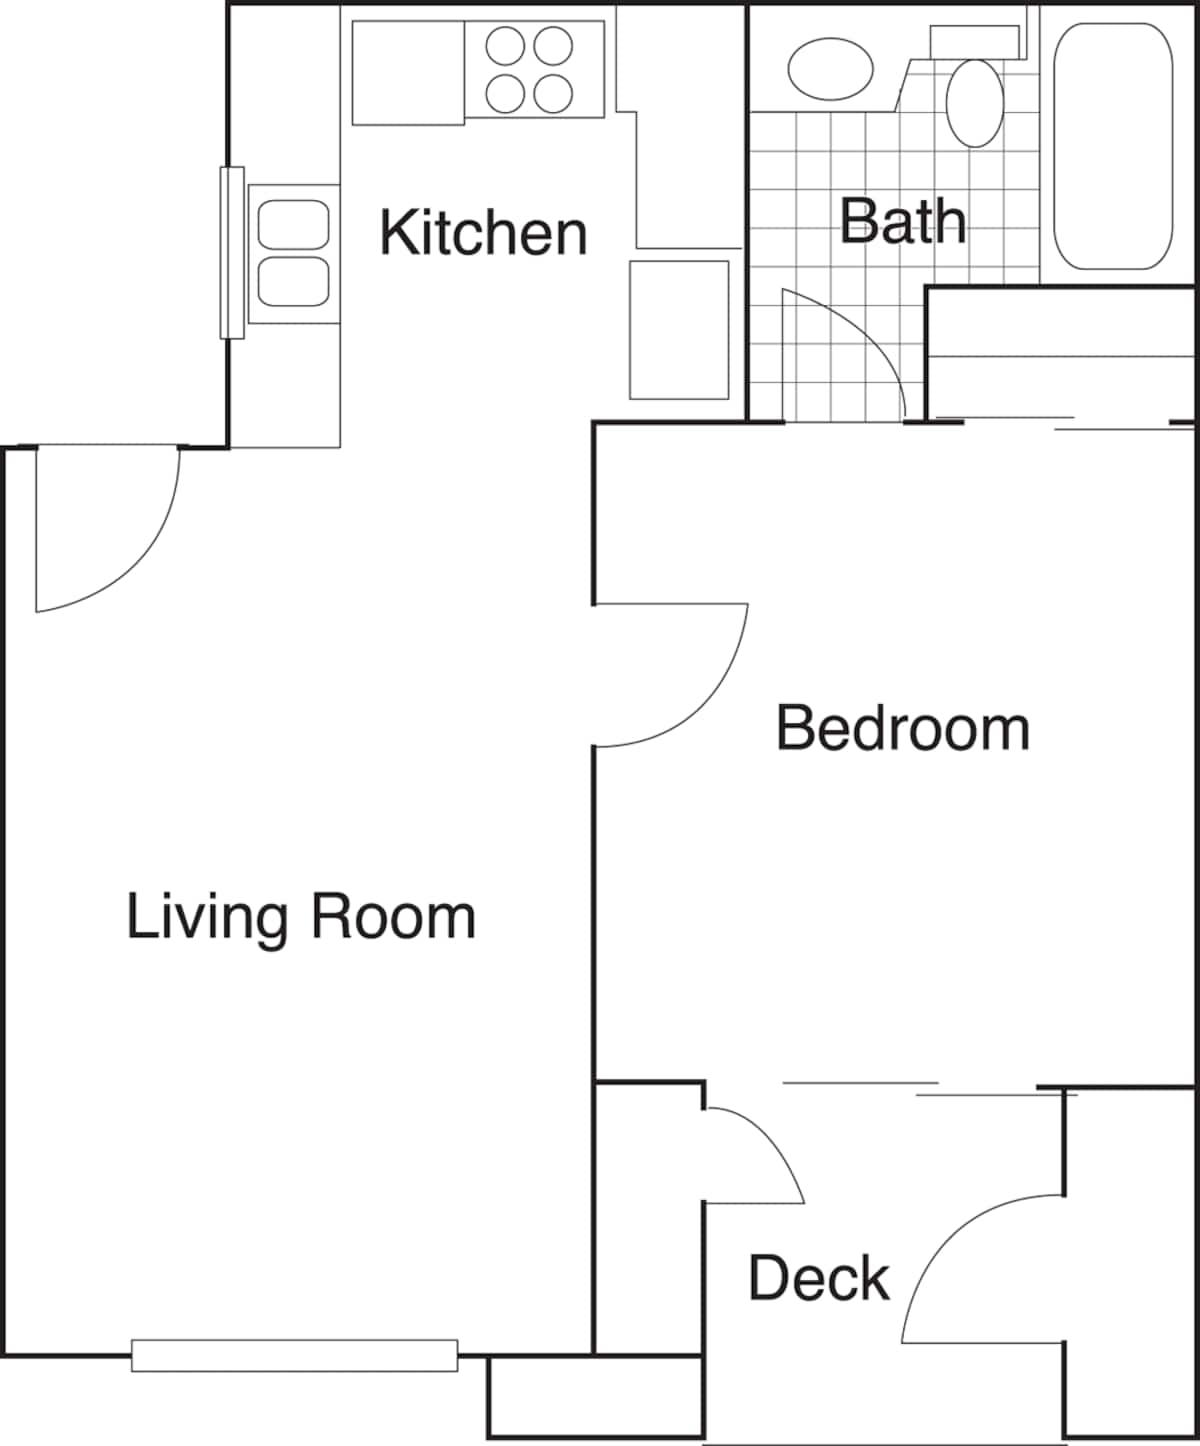 Floorplan diagram for The Ridge Renovated, showing 1 bedroom